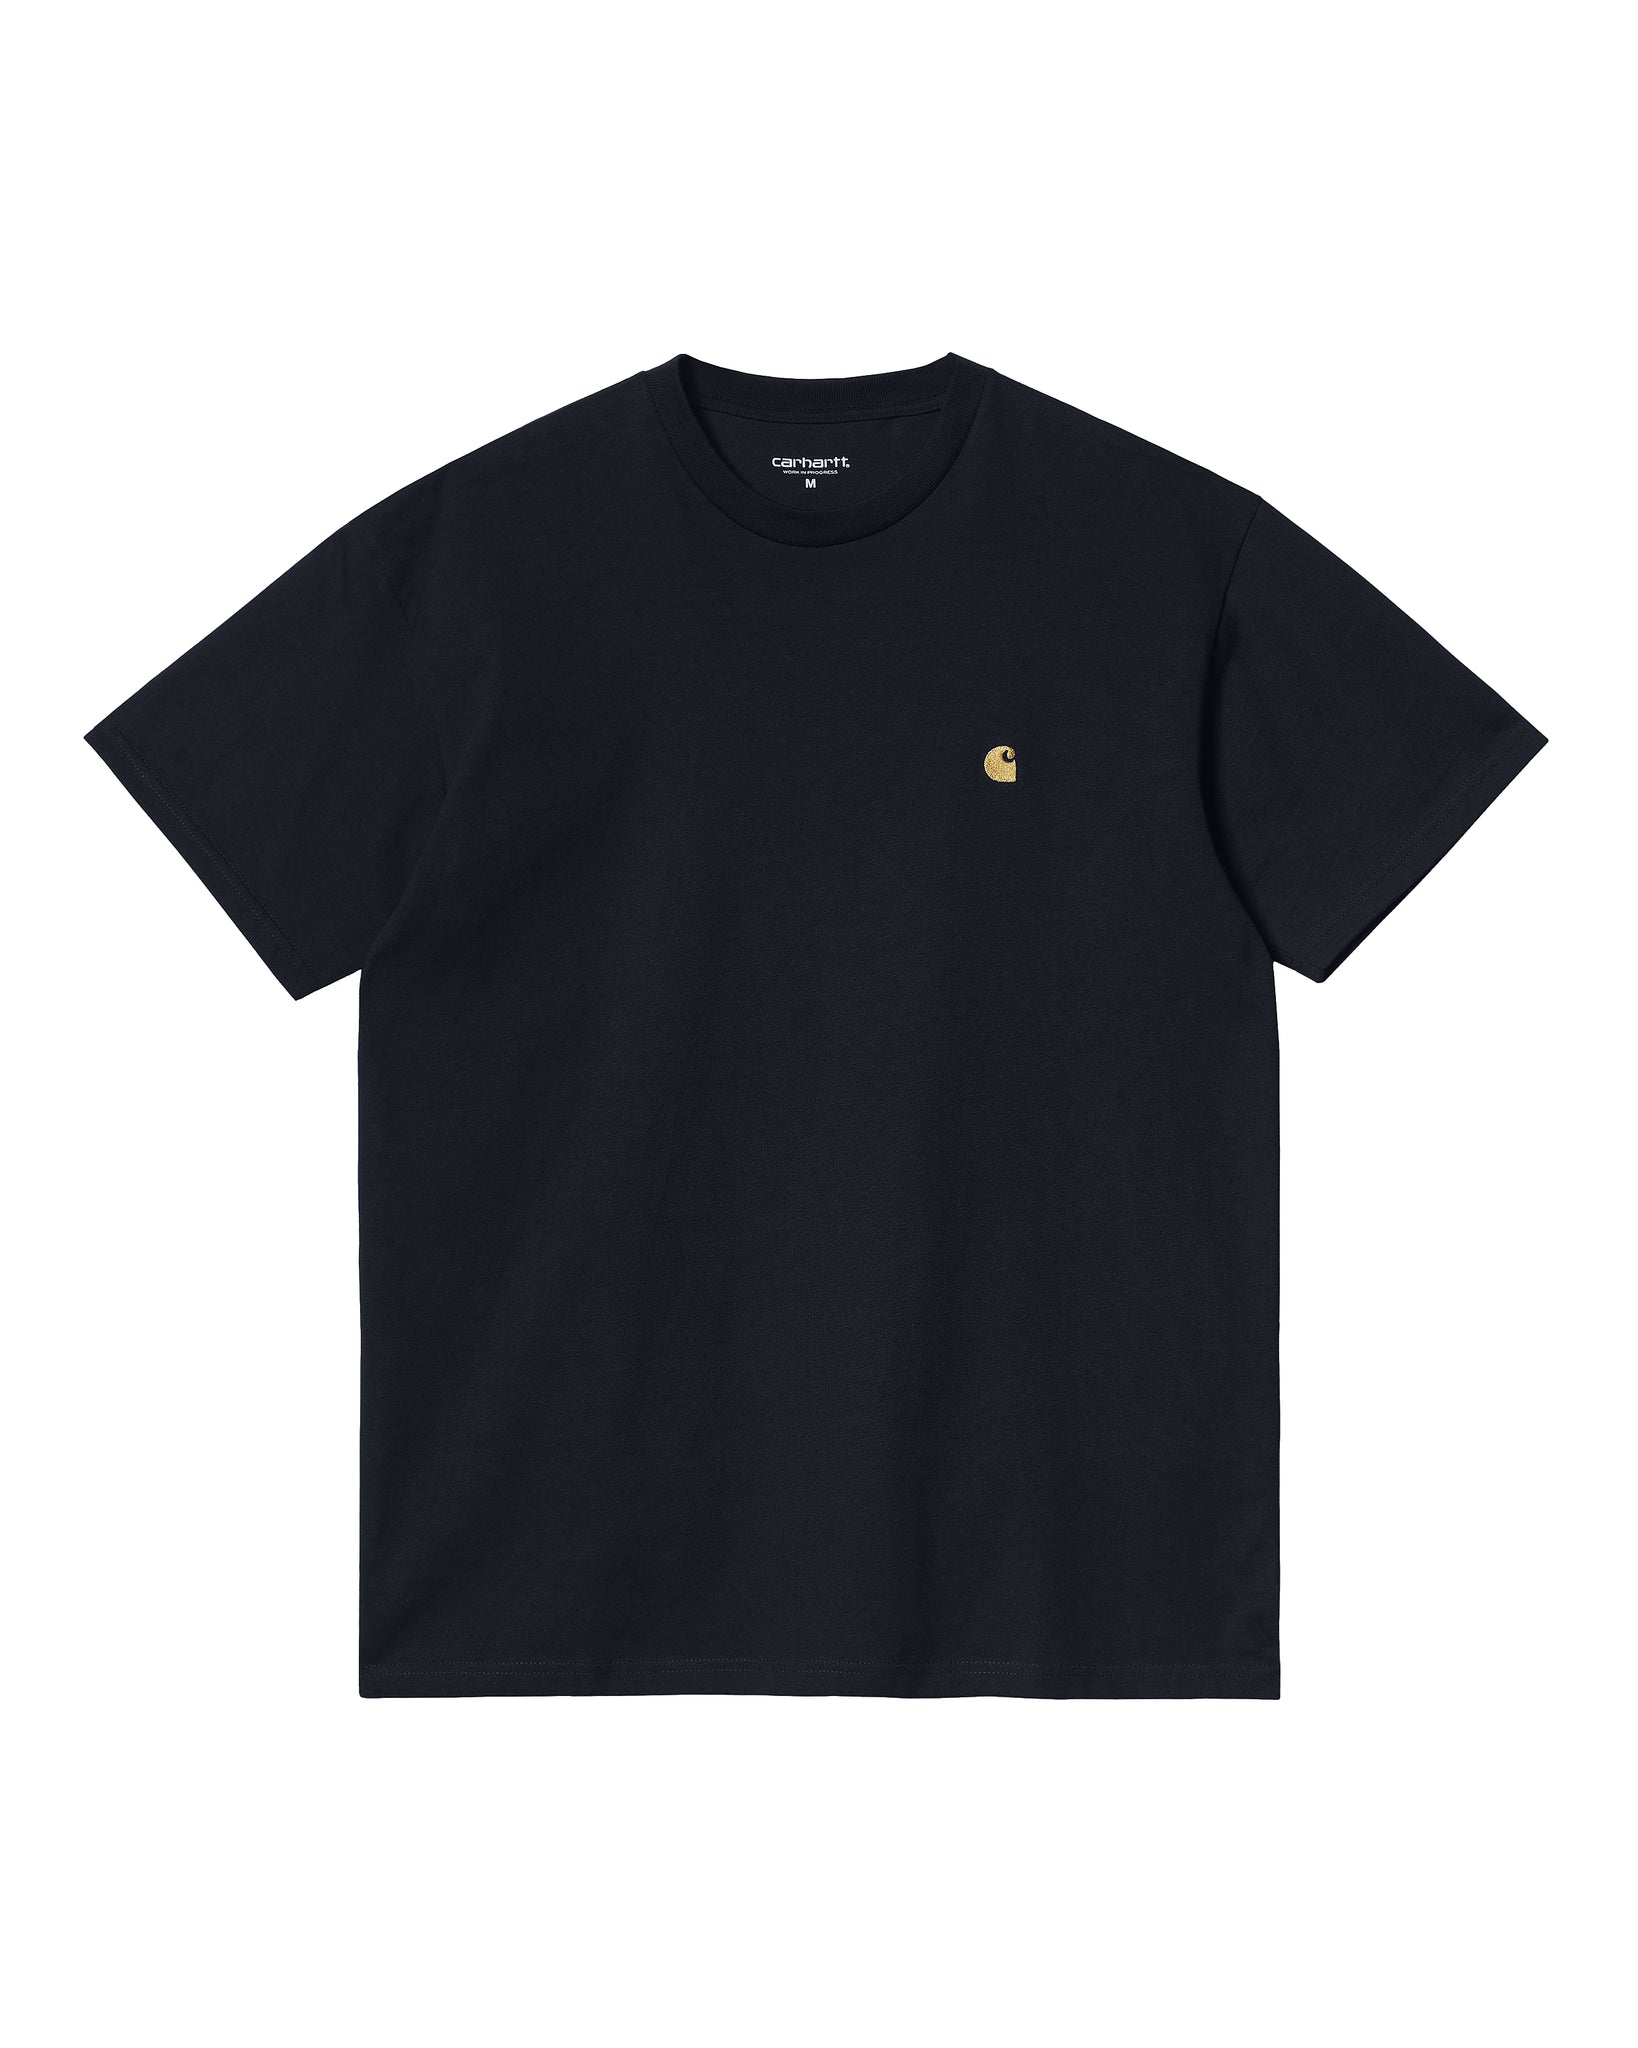 SS Chase T-Shirt - Dark Navy/Gold